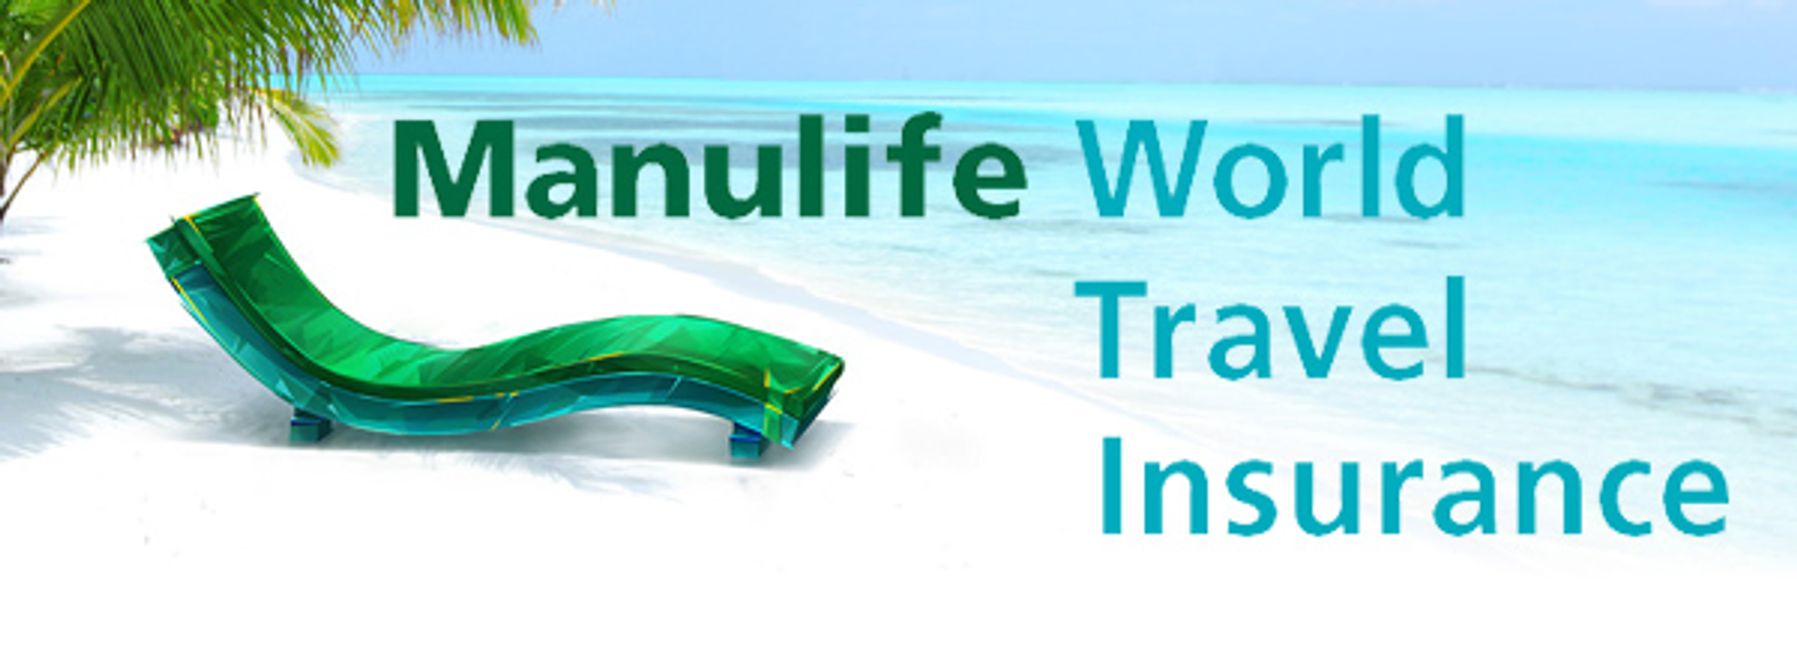 Travel Insurance Manulife